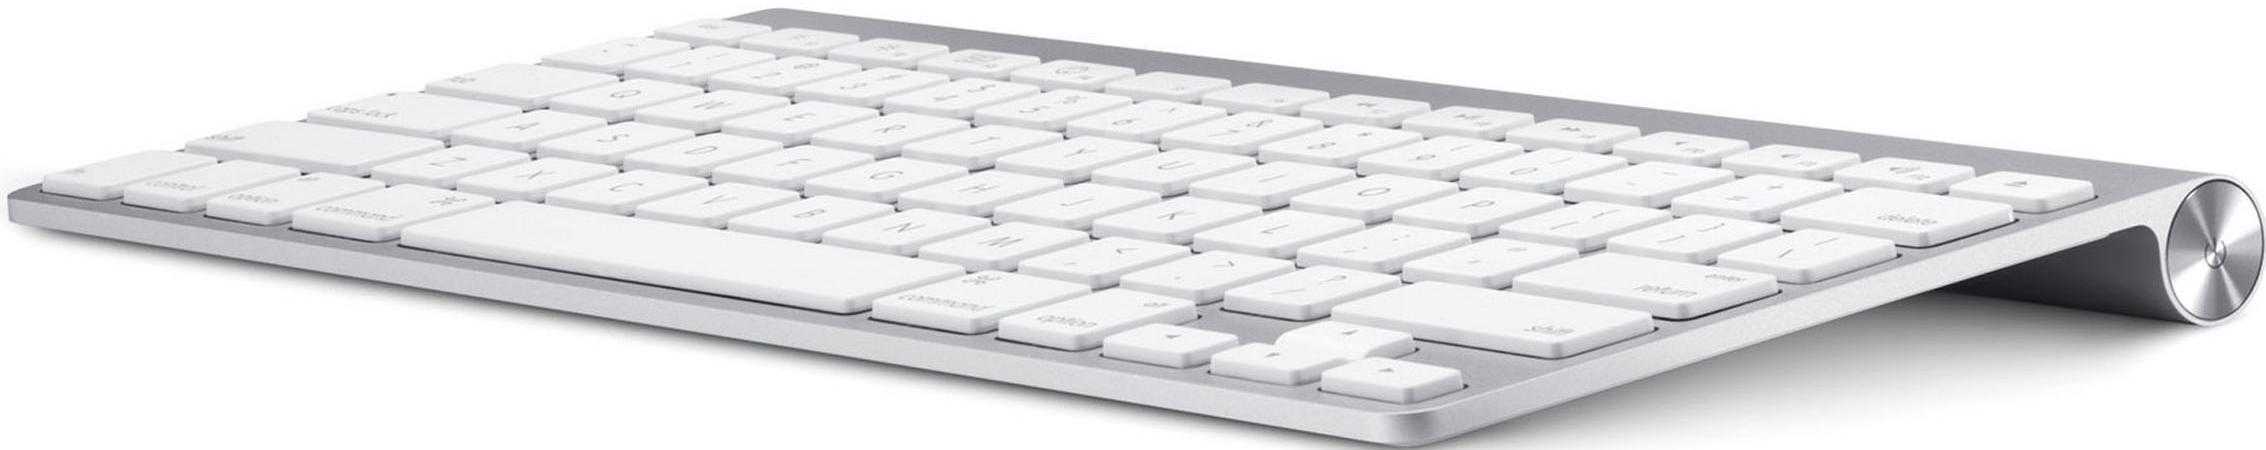 Я обожаю клавиатуры apple и точка. обзор magic keyboard 2